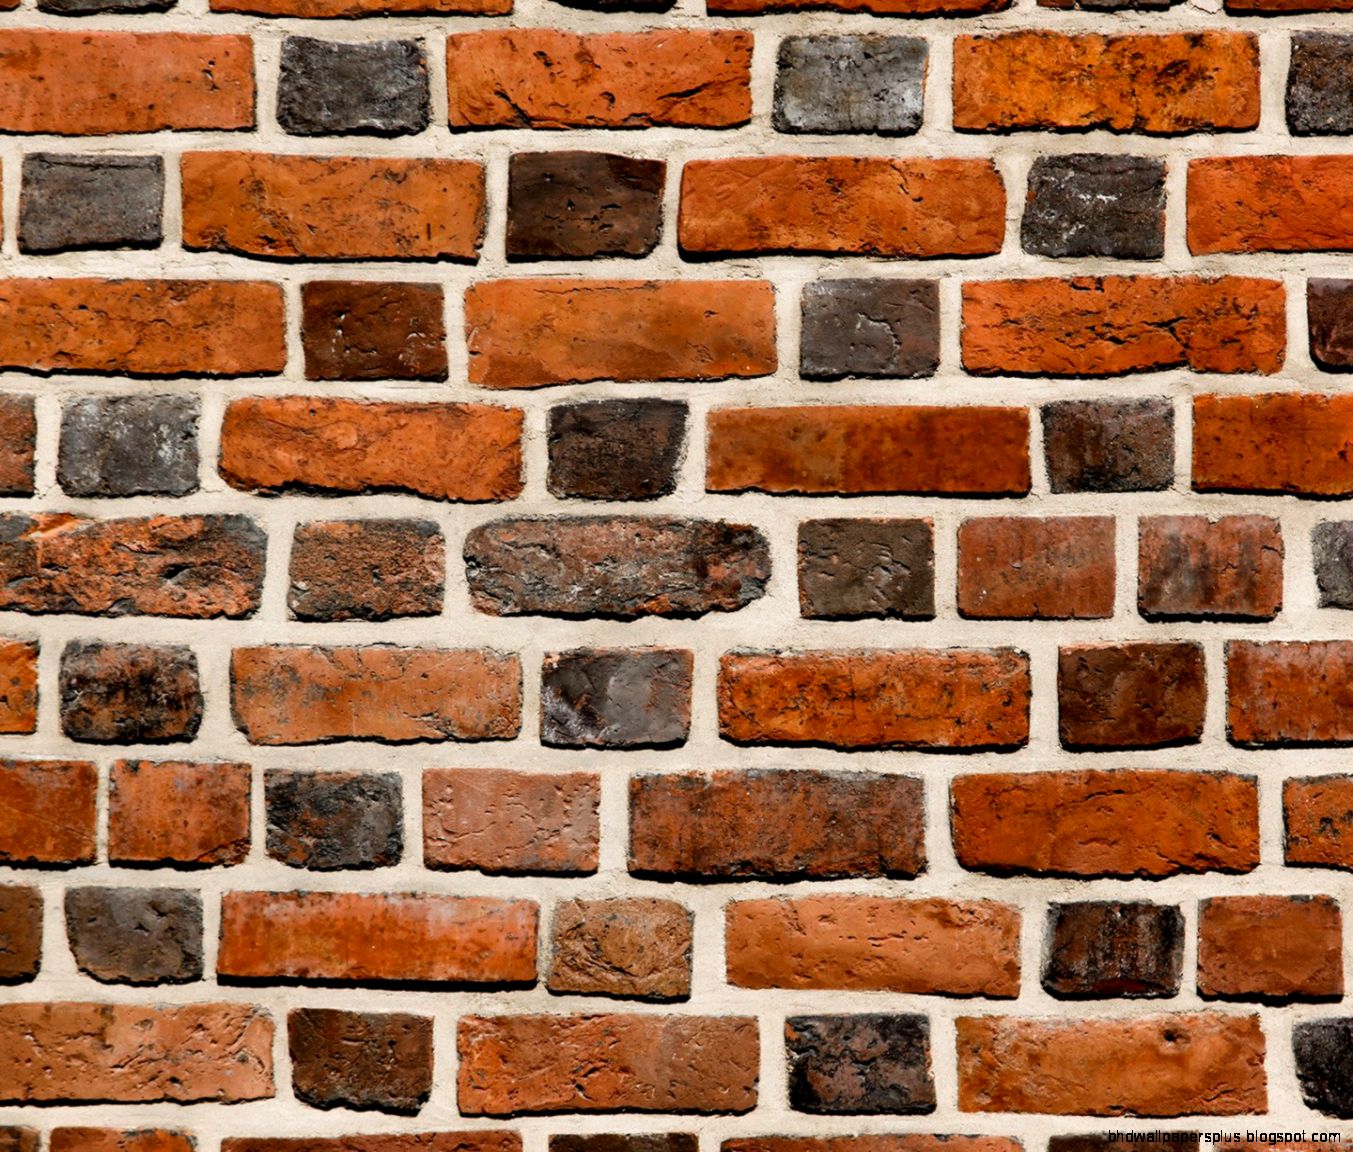 hd wallpapers for nexus 5,brick,brickwork,wall,brown,pattern